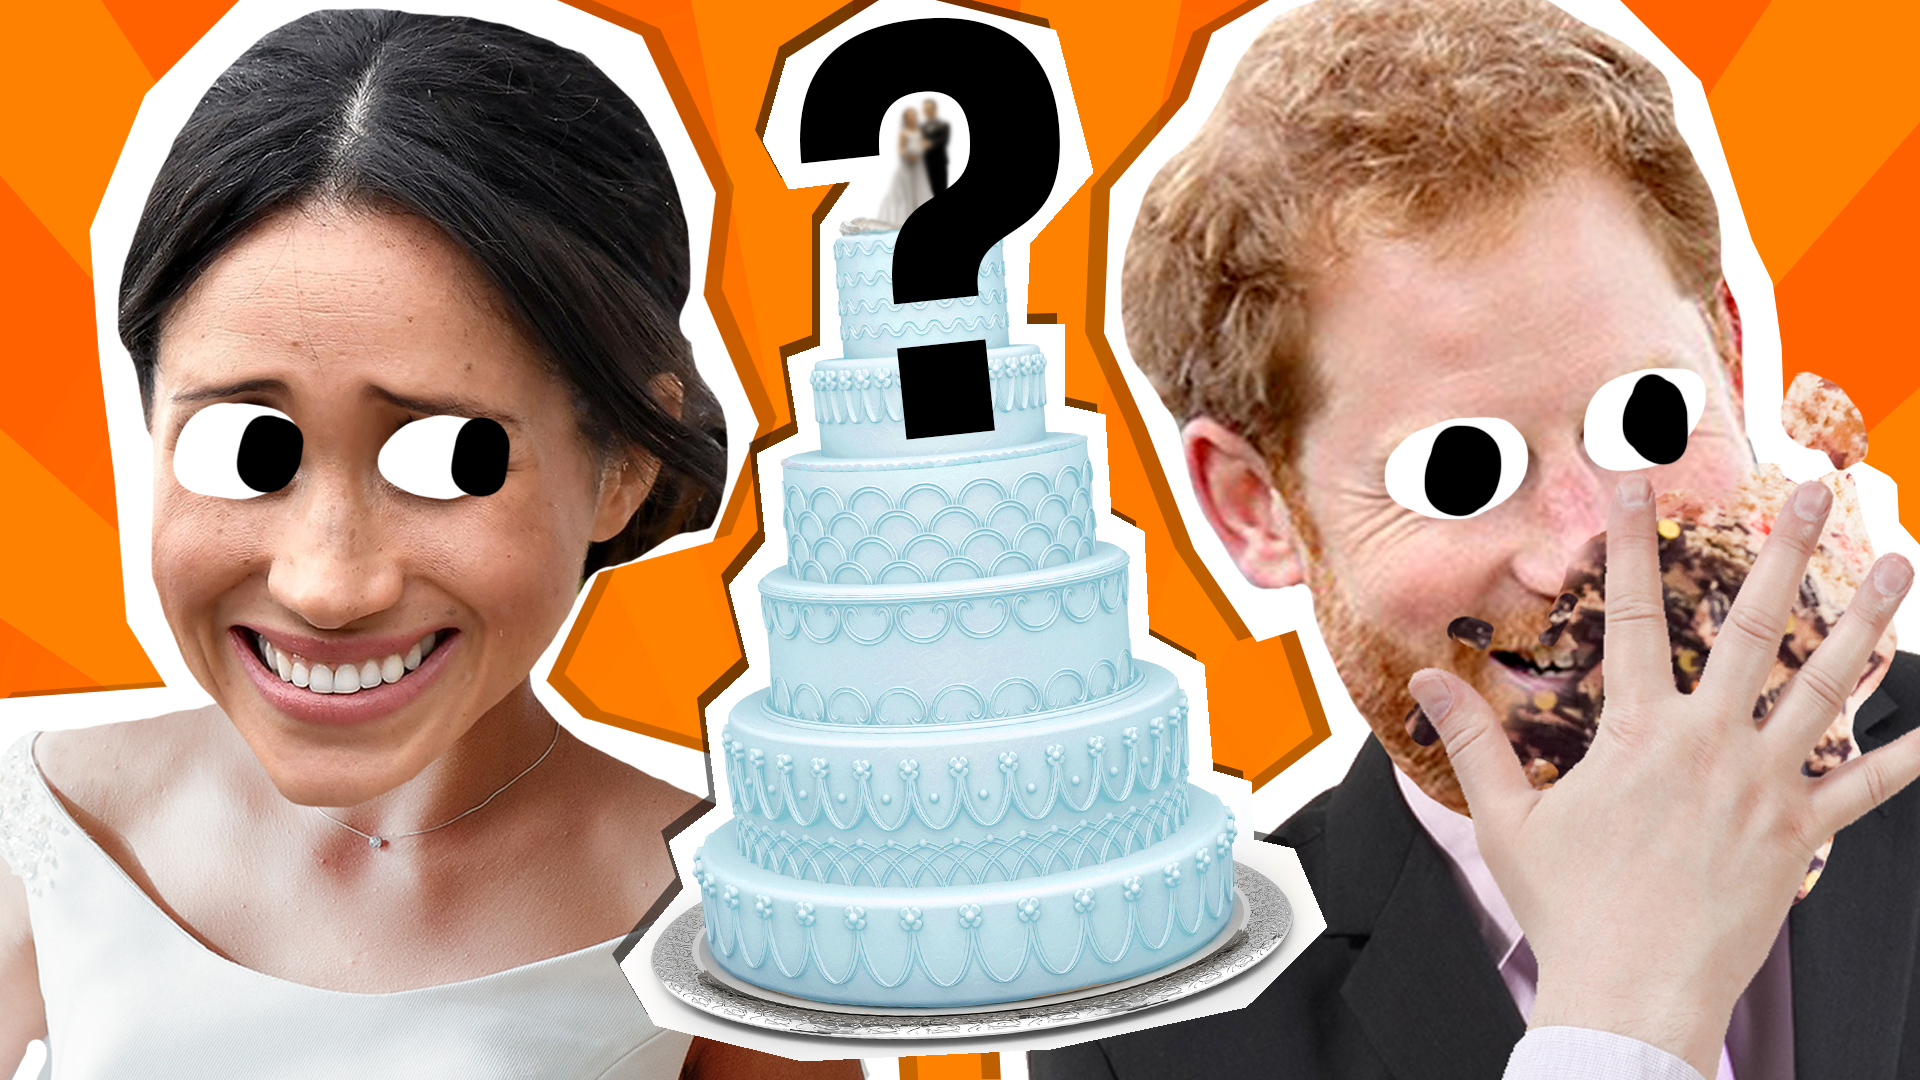 Megan and Harry's Wedding Cake quiz